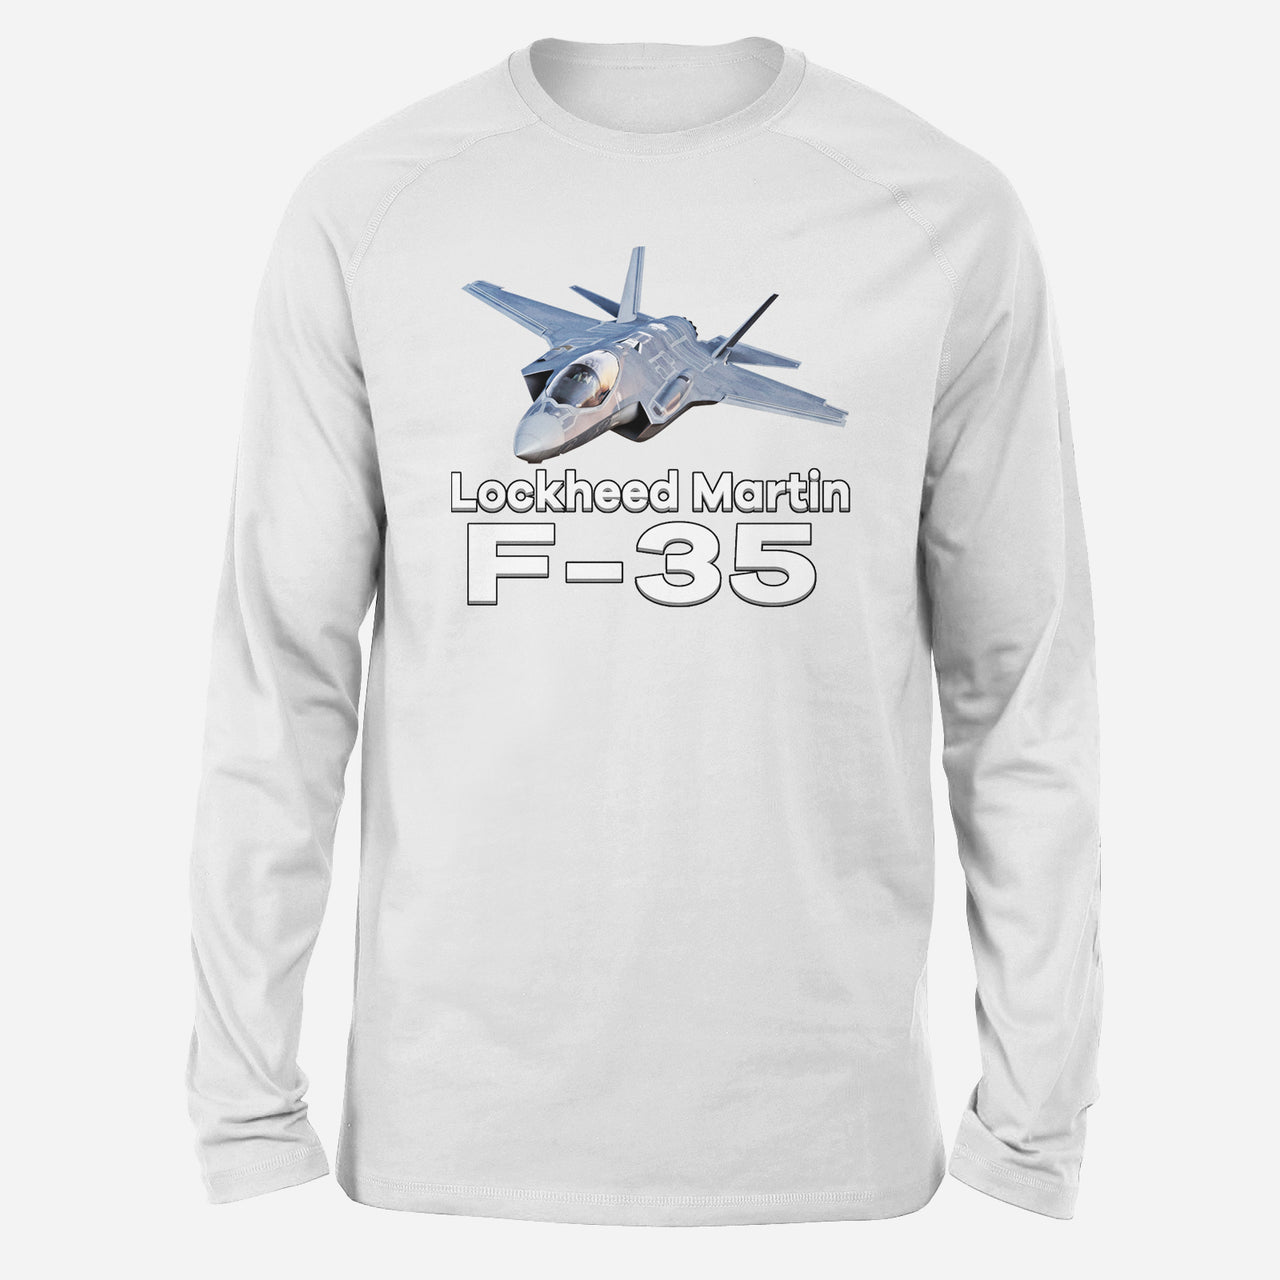 The Lockheed Martin F35 Designed Long-Sleeve T-Shirts